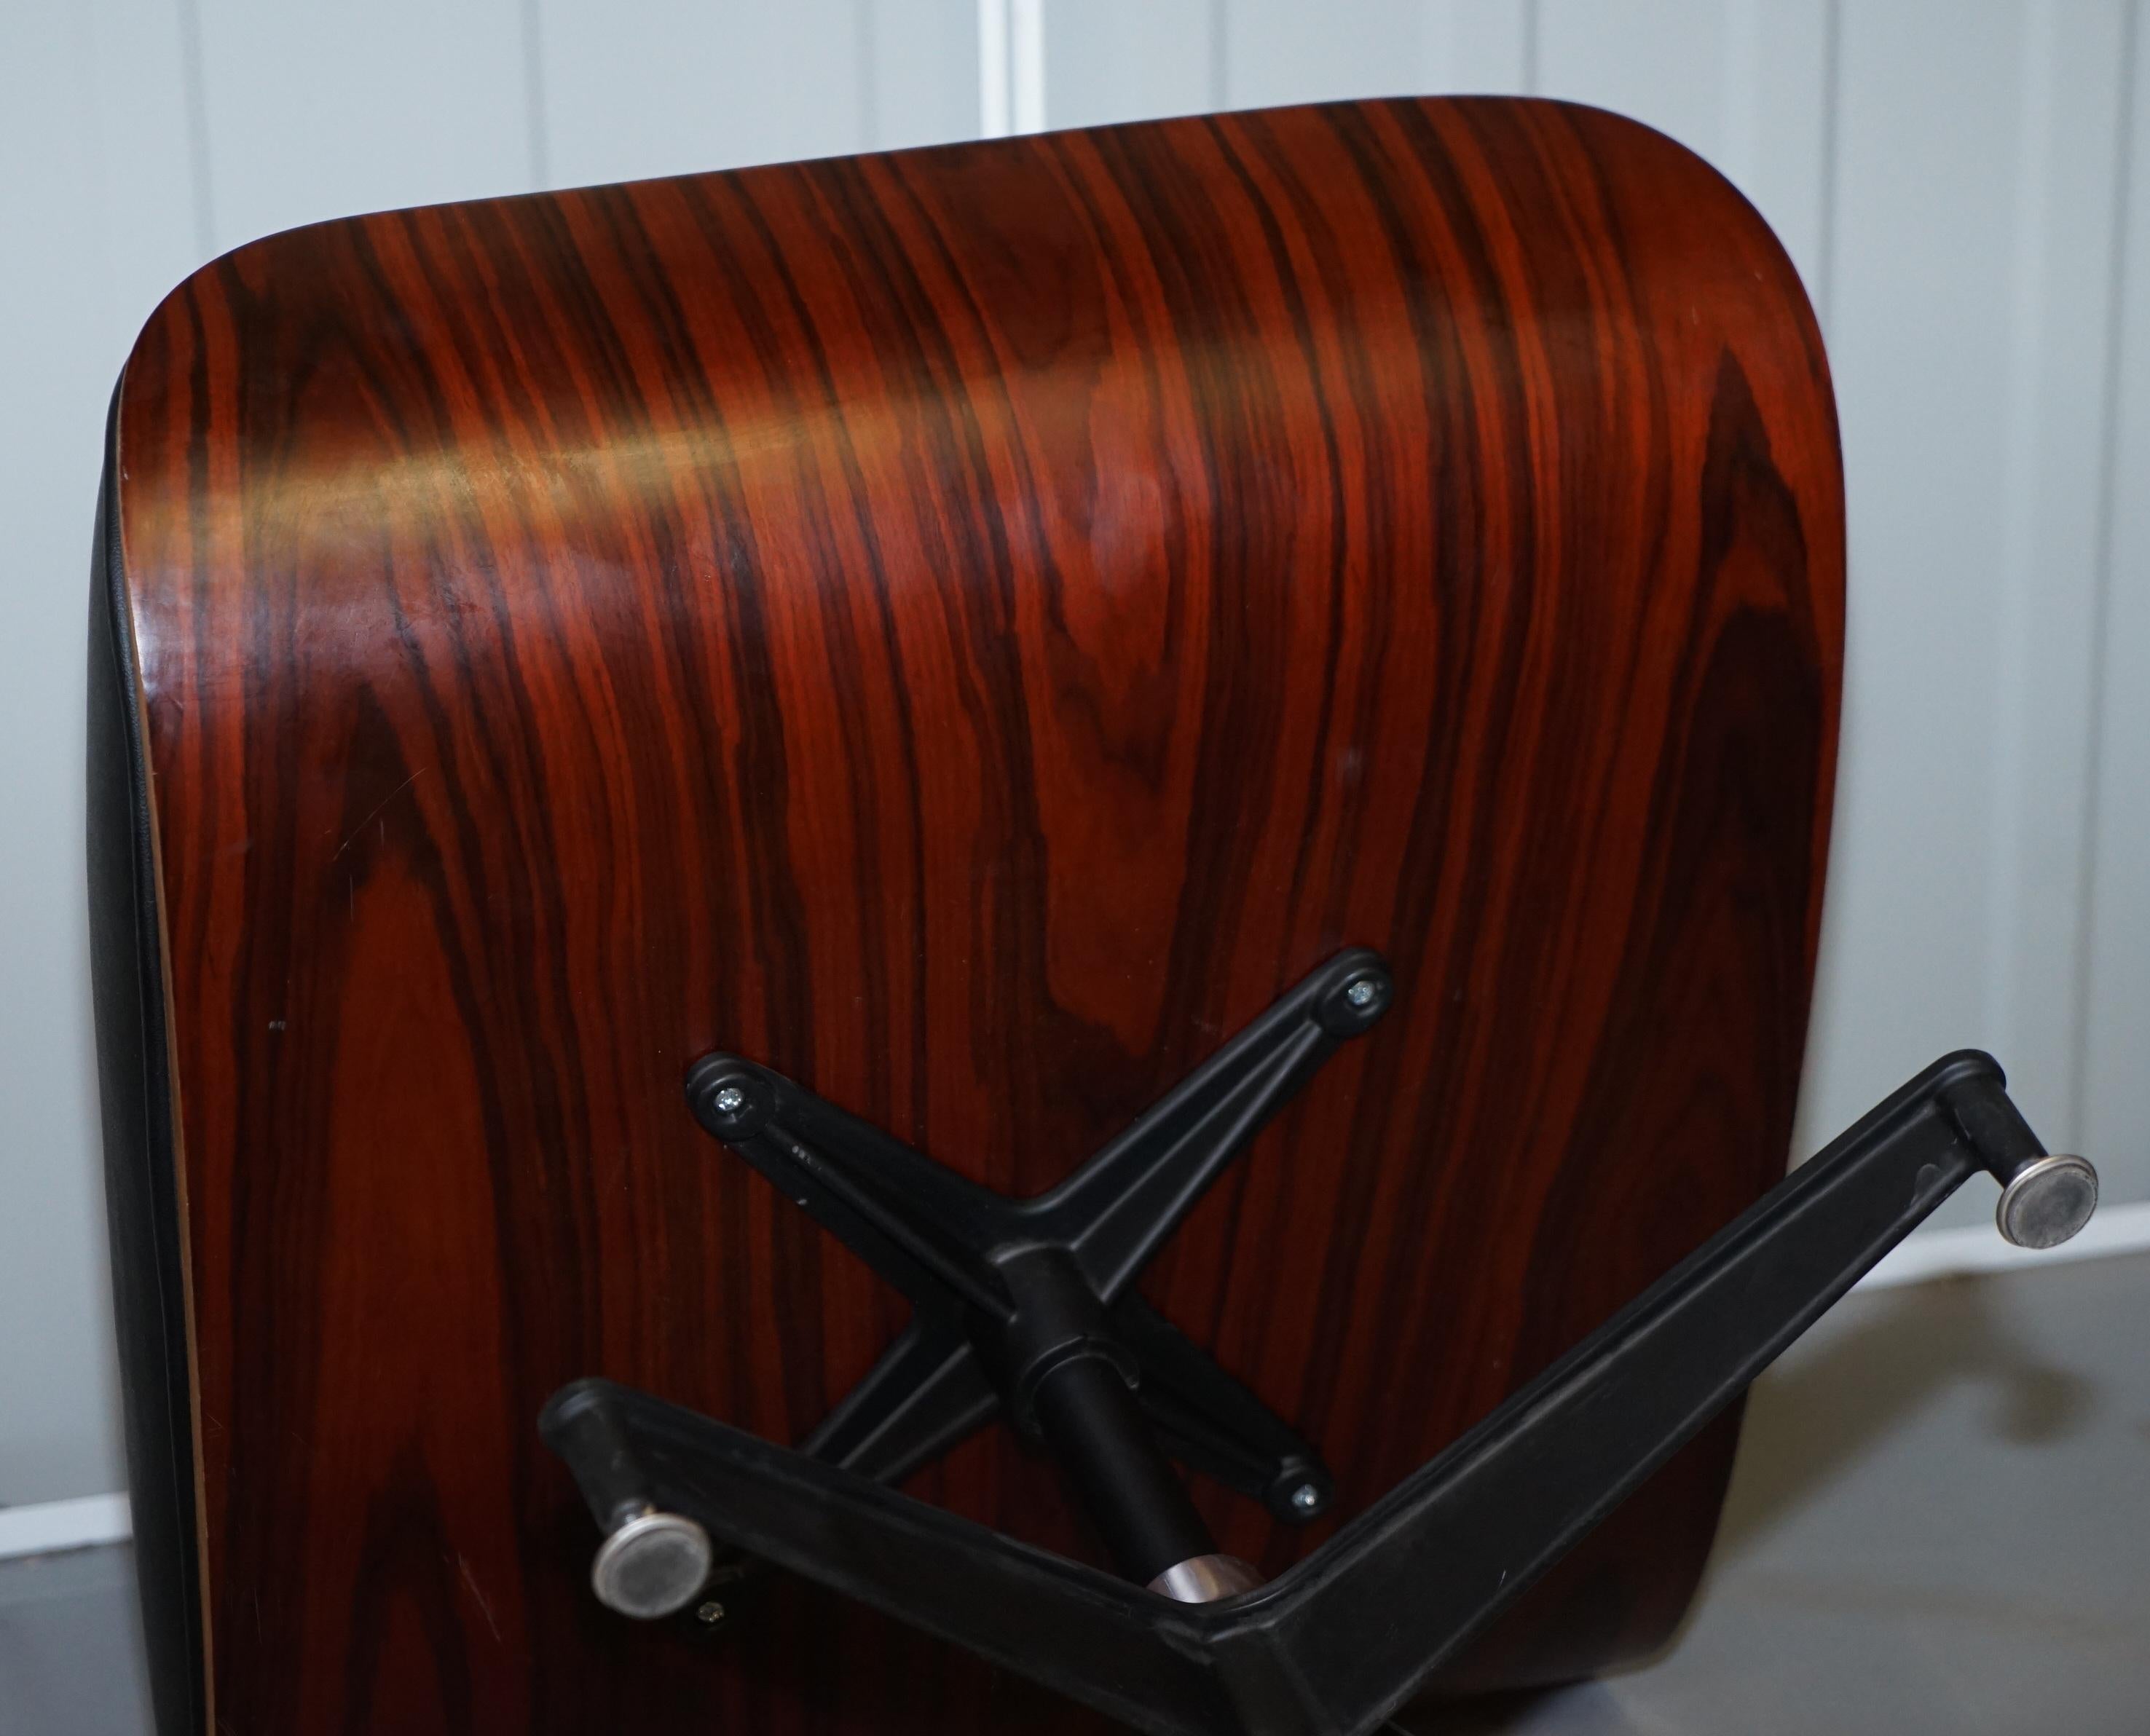 Black Leather Hardwood Ottoman Footstool for Lounge Chairs Nice Look & Feel 4